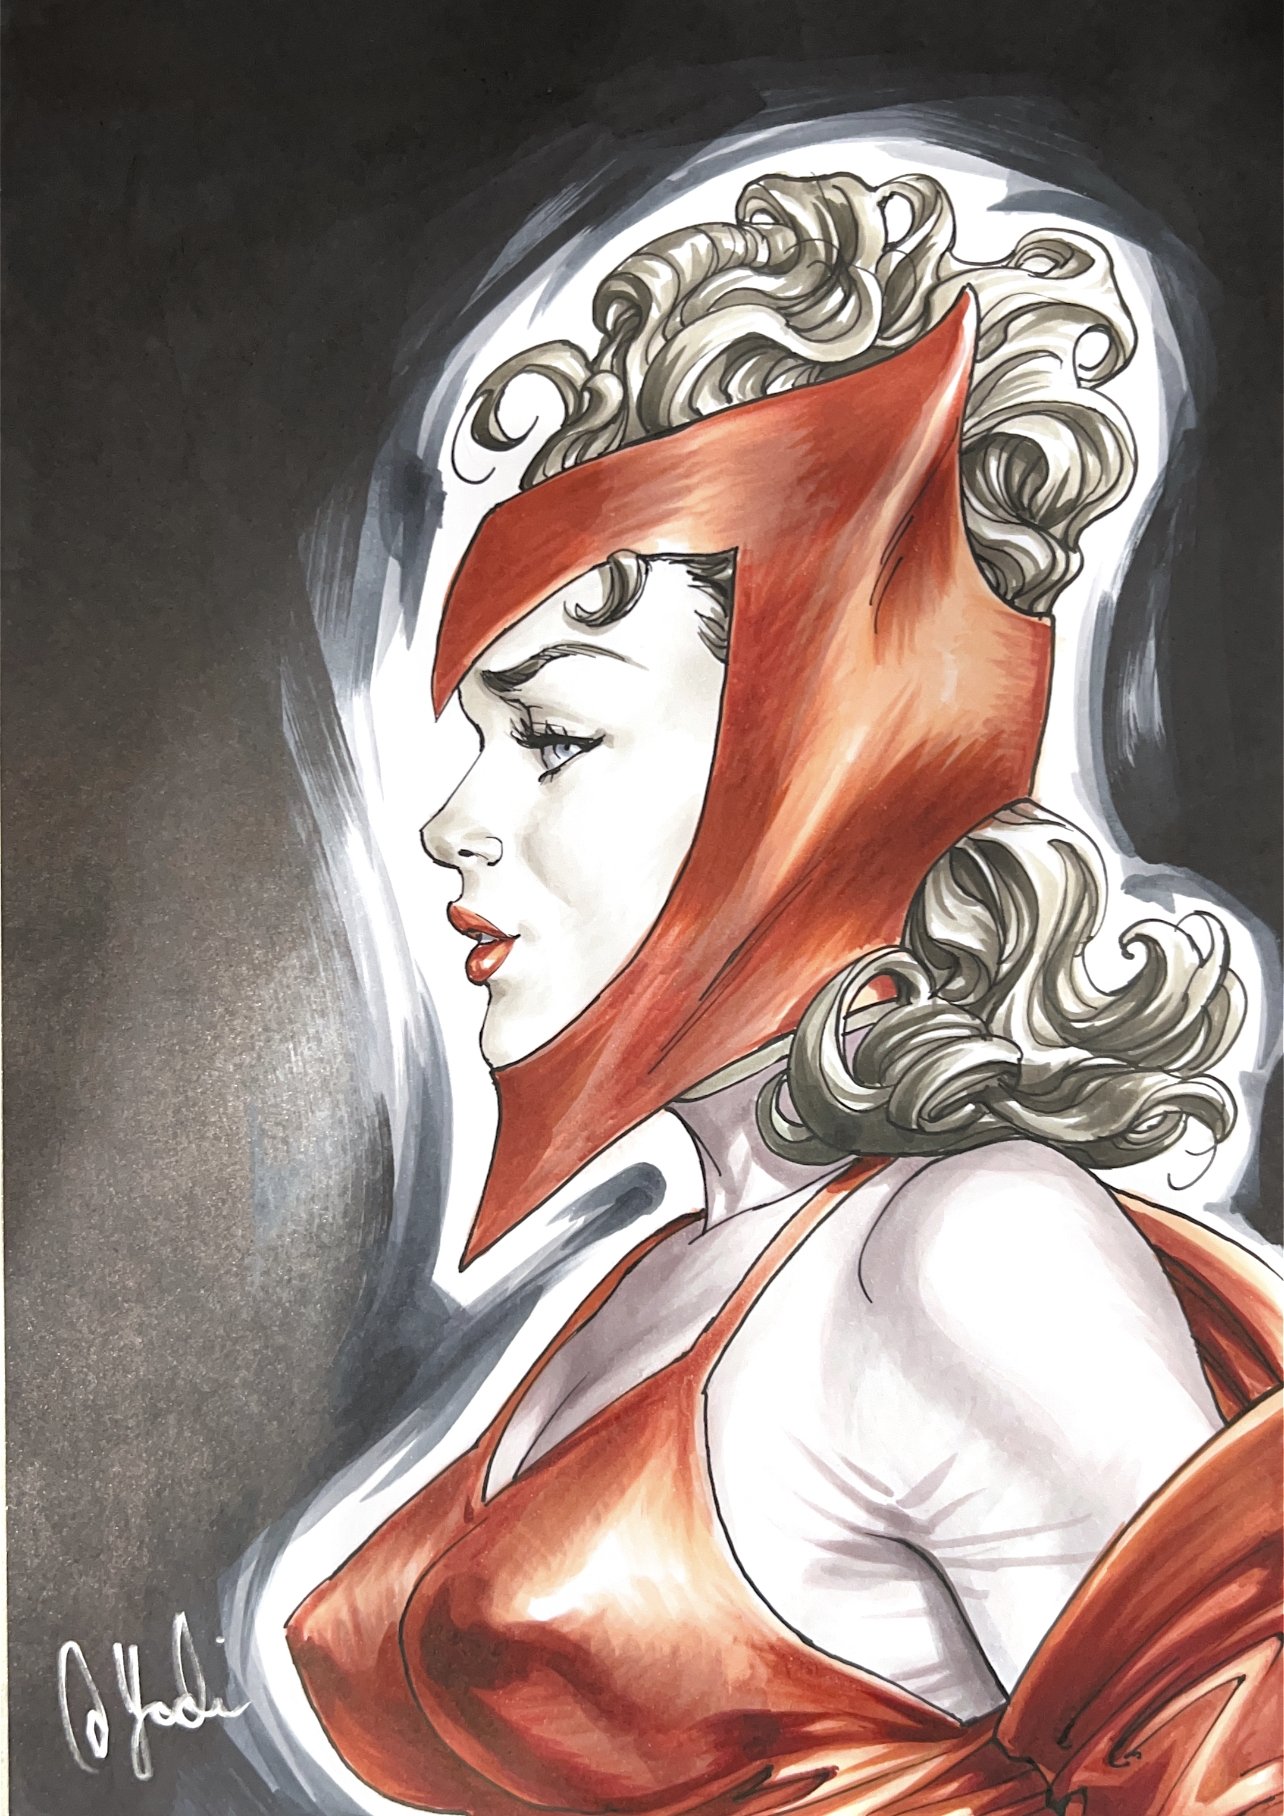 Scarlet Witch - MCU design Comicbook - 06 2021 by LucasBoltagon on